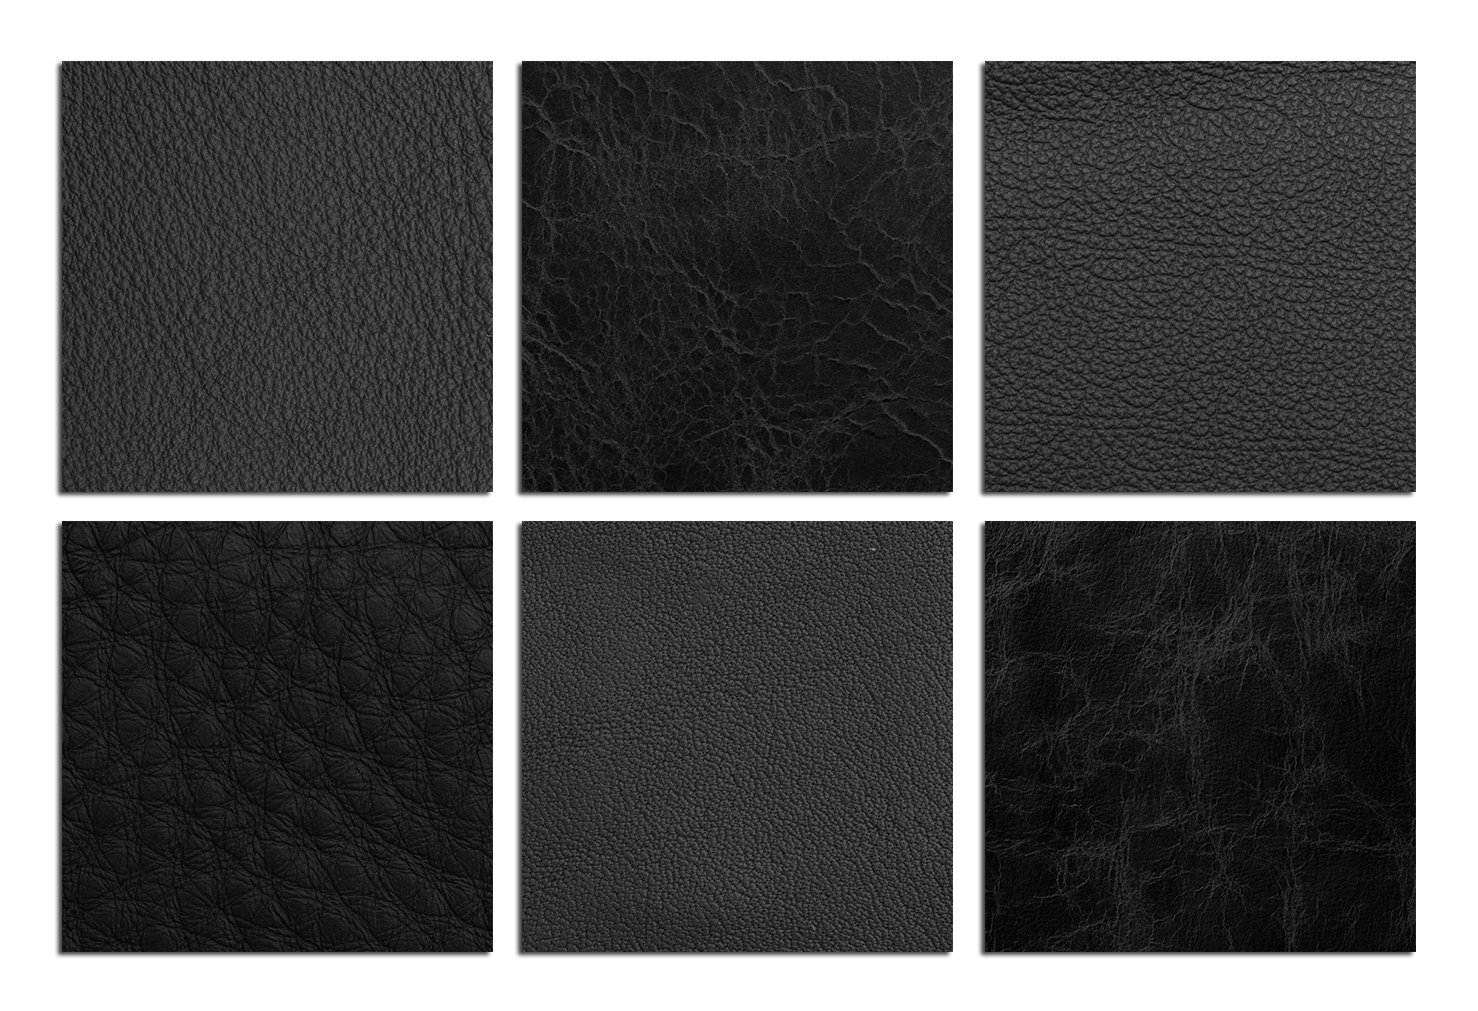 Black Leather Textures 1